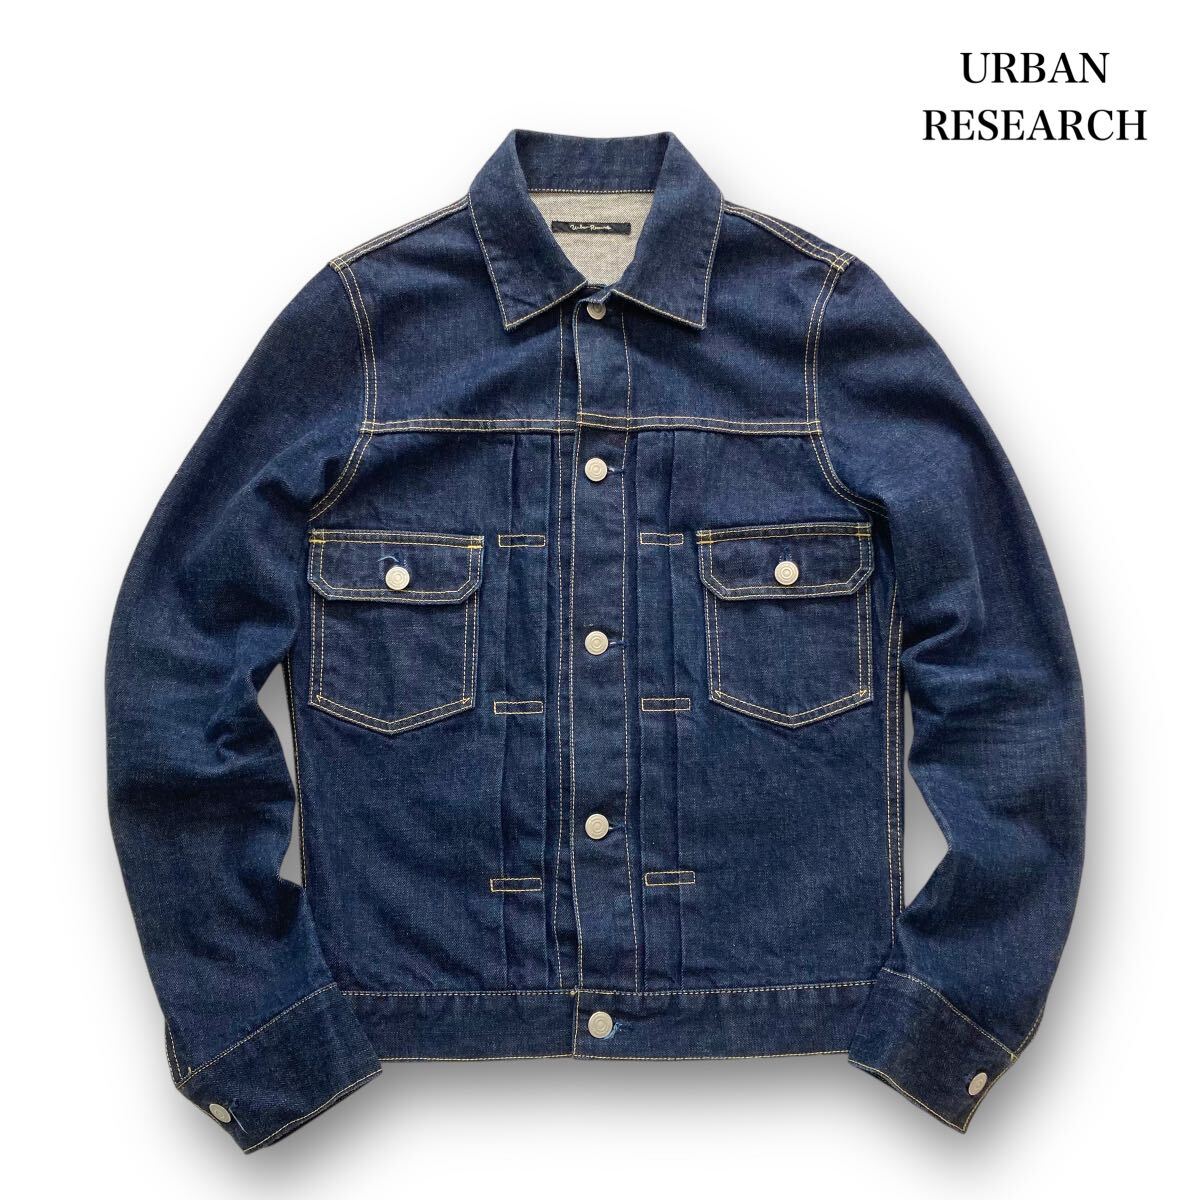 [URBAN RESEARCH]( dark blue ) Urban Research Second type Denim jacket 2nd model denim jacket DENIME JACKET made in Japan Tracker JK